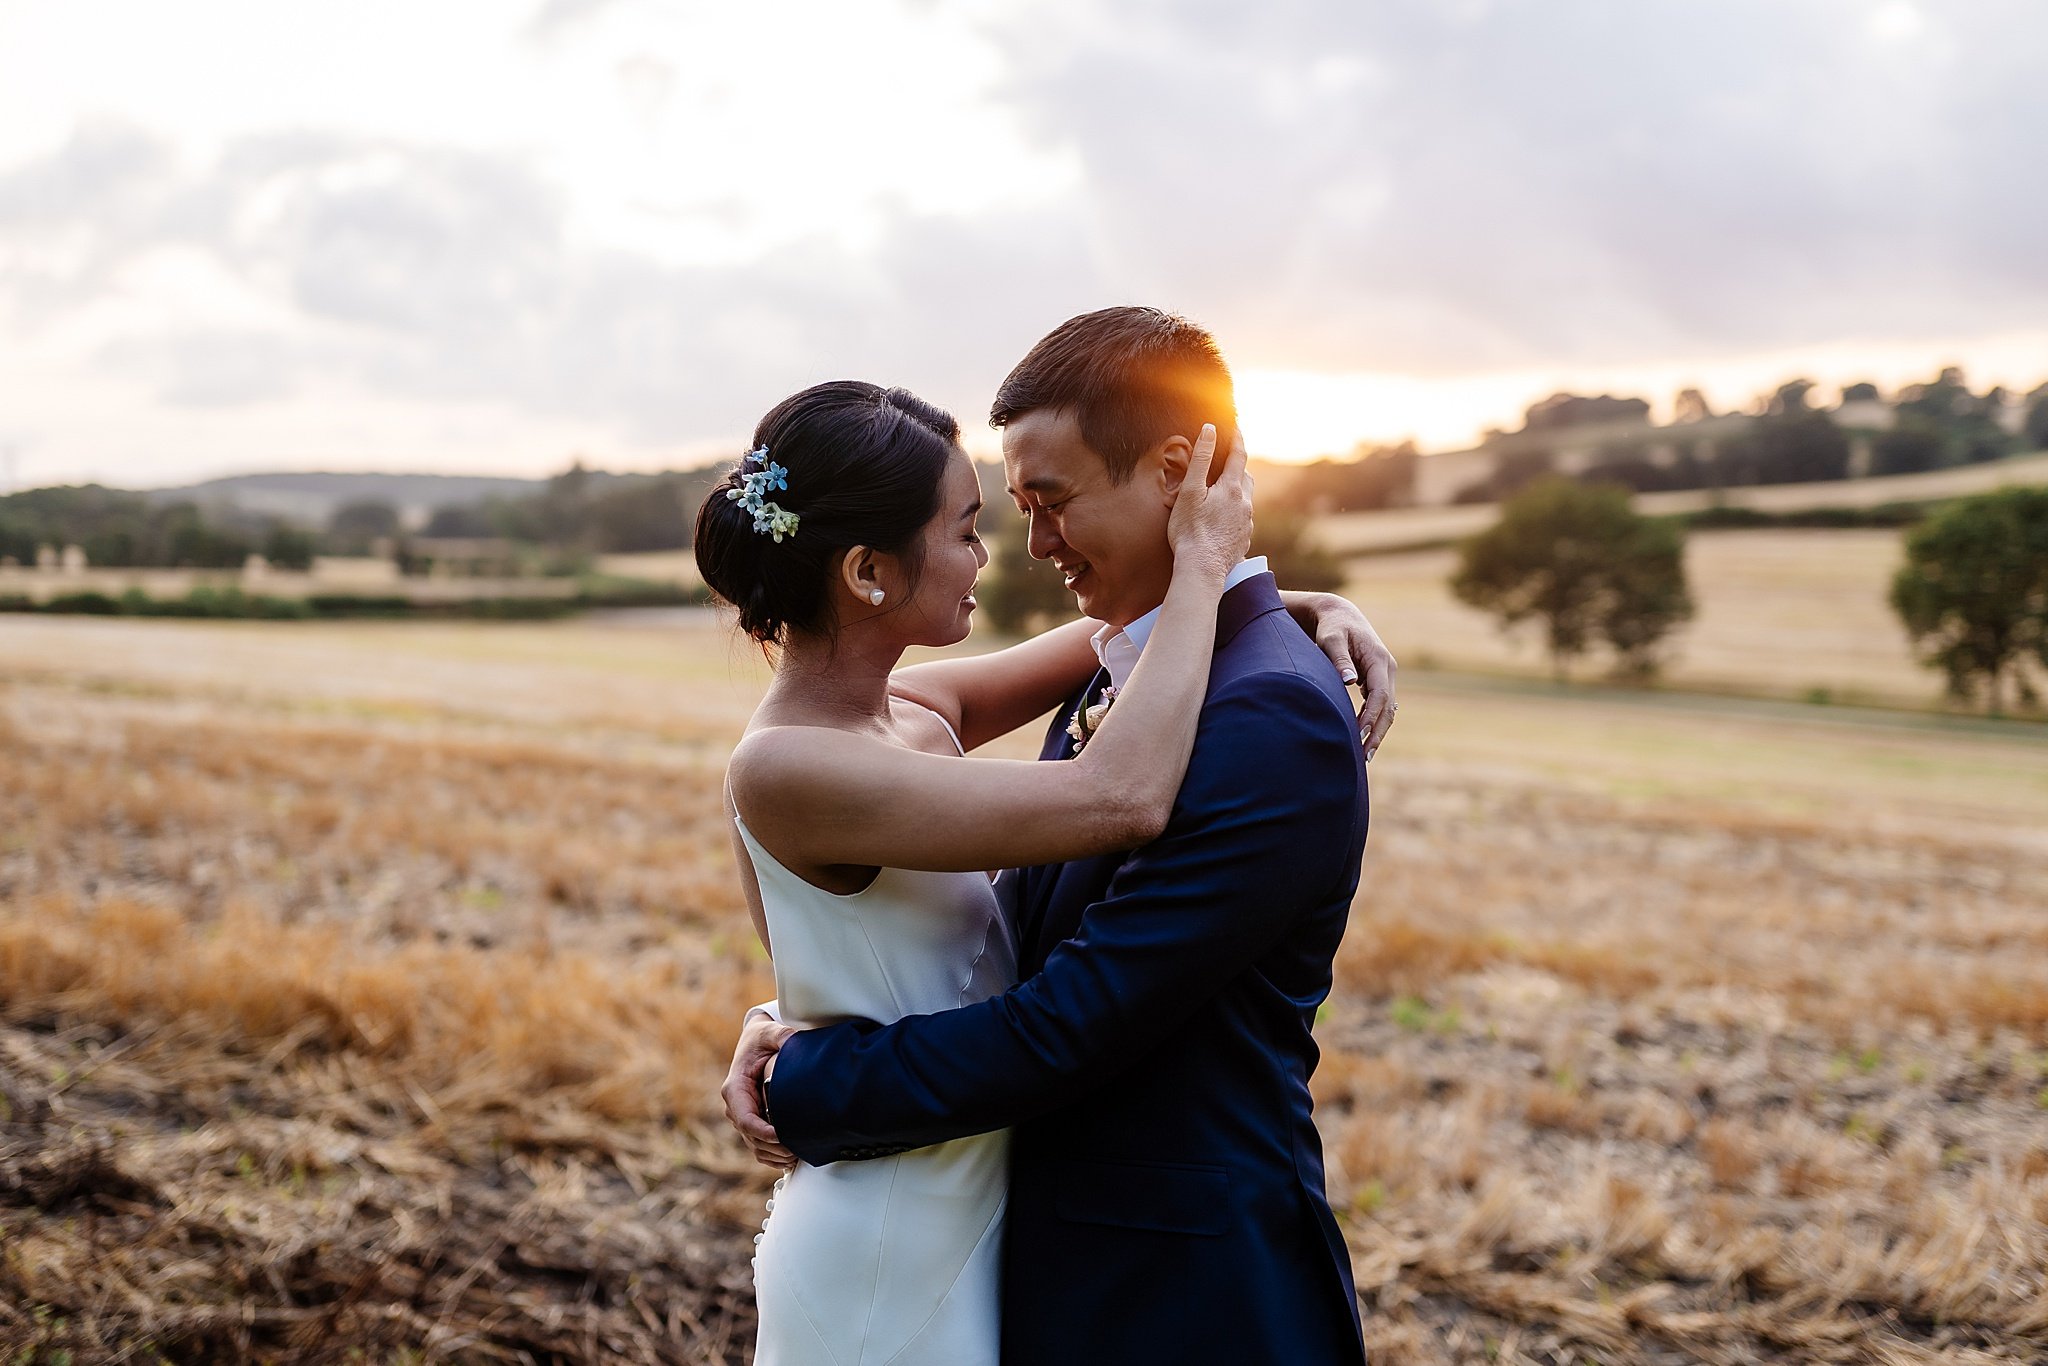 Wedding at Bury Court Farm in Surrey